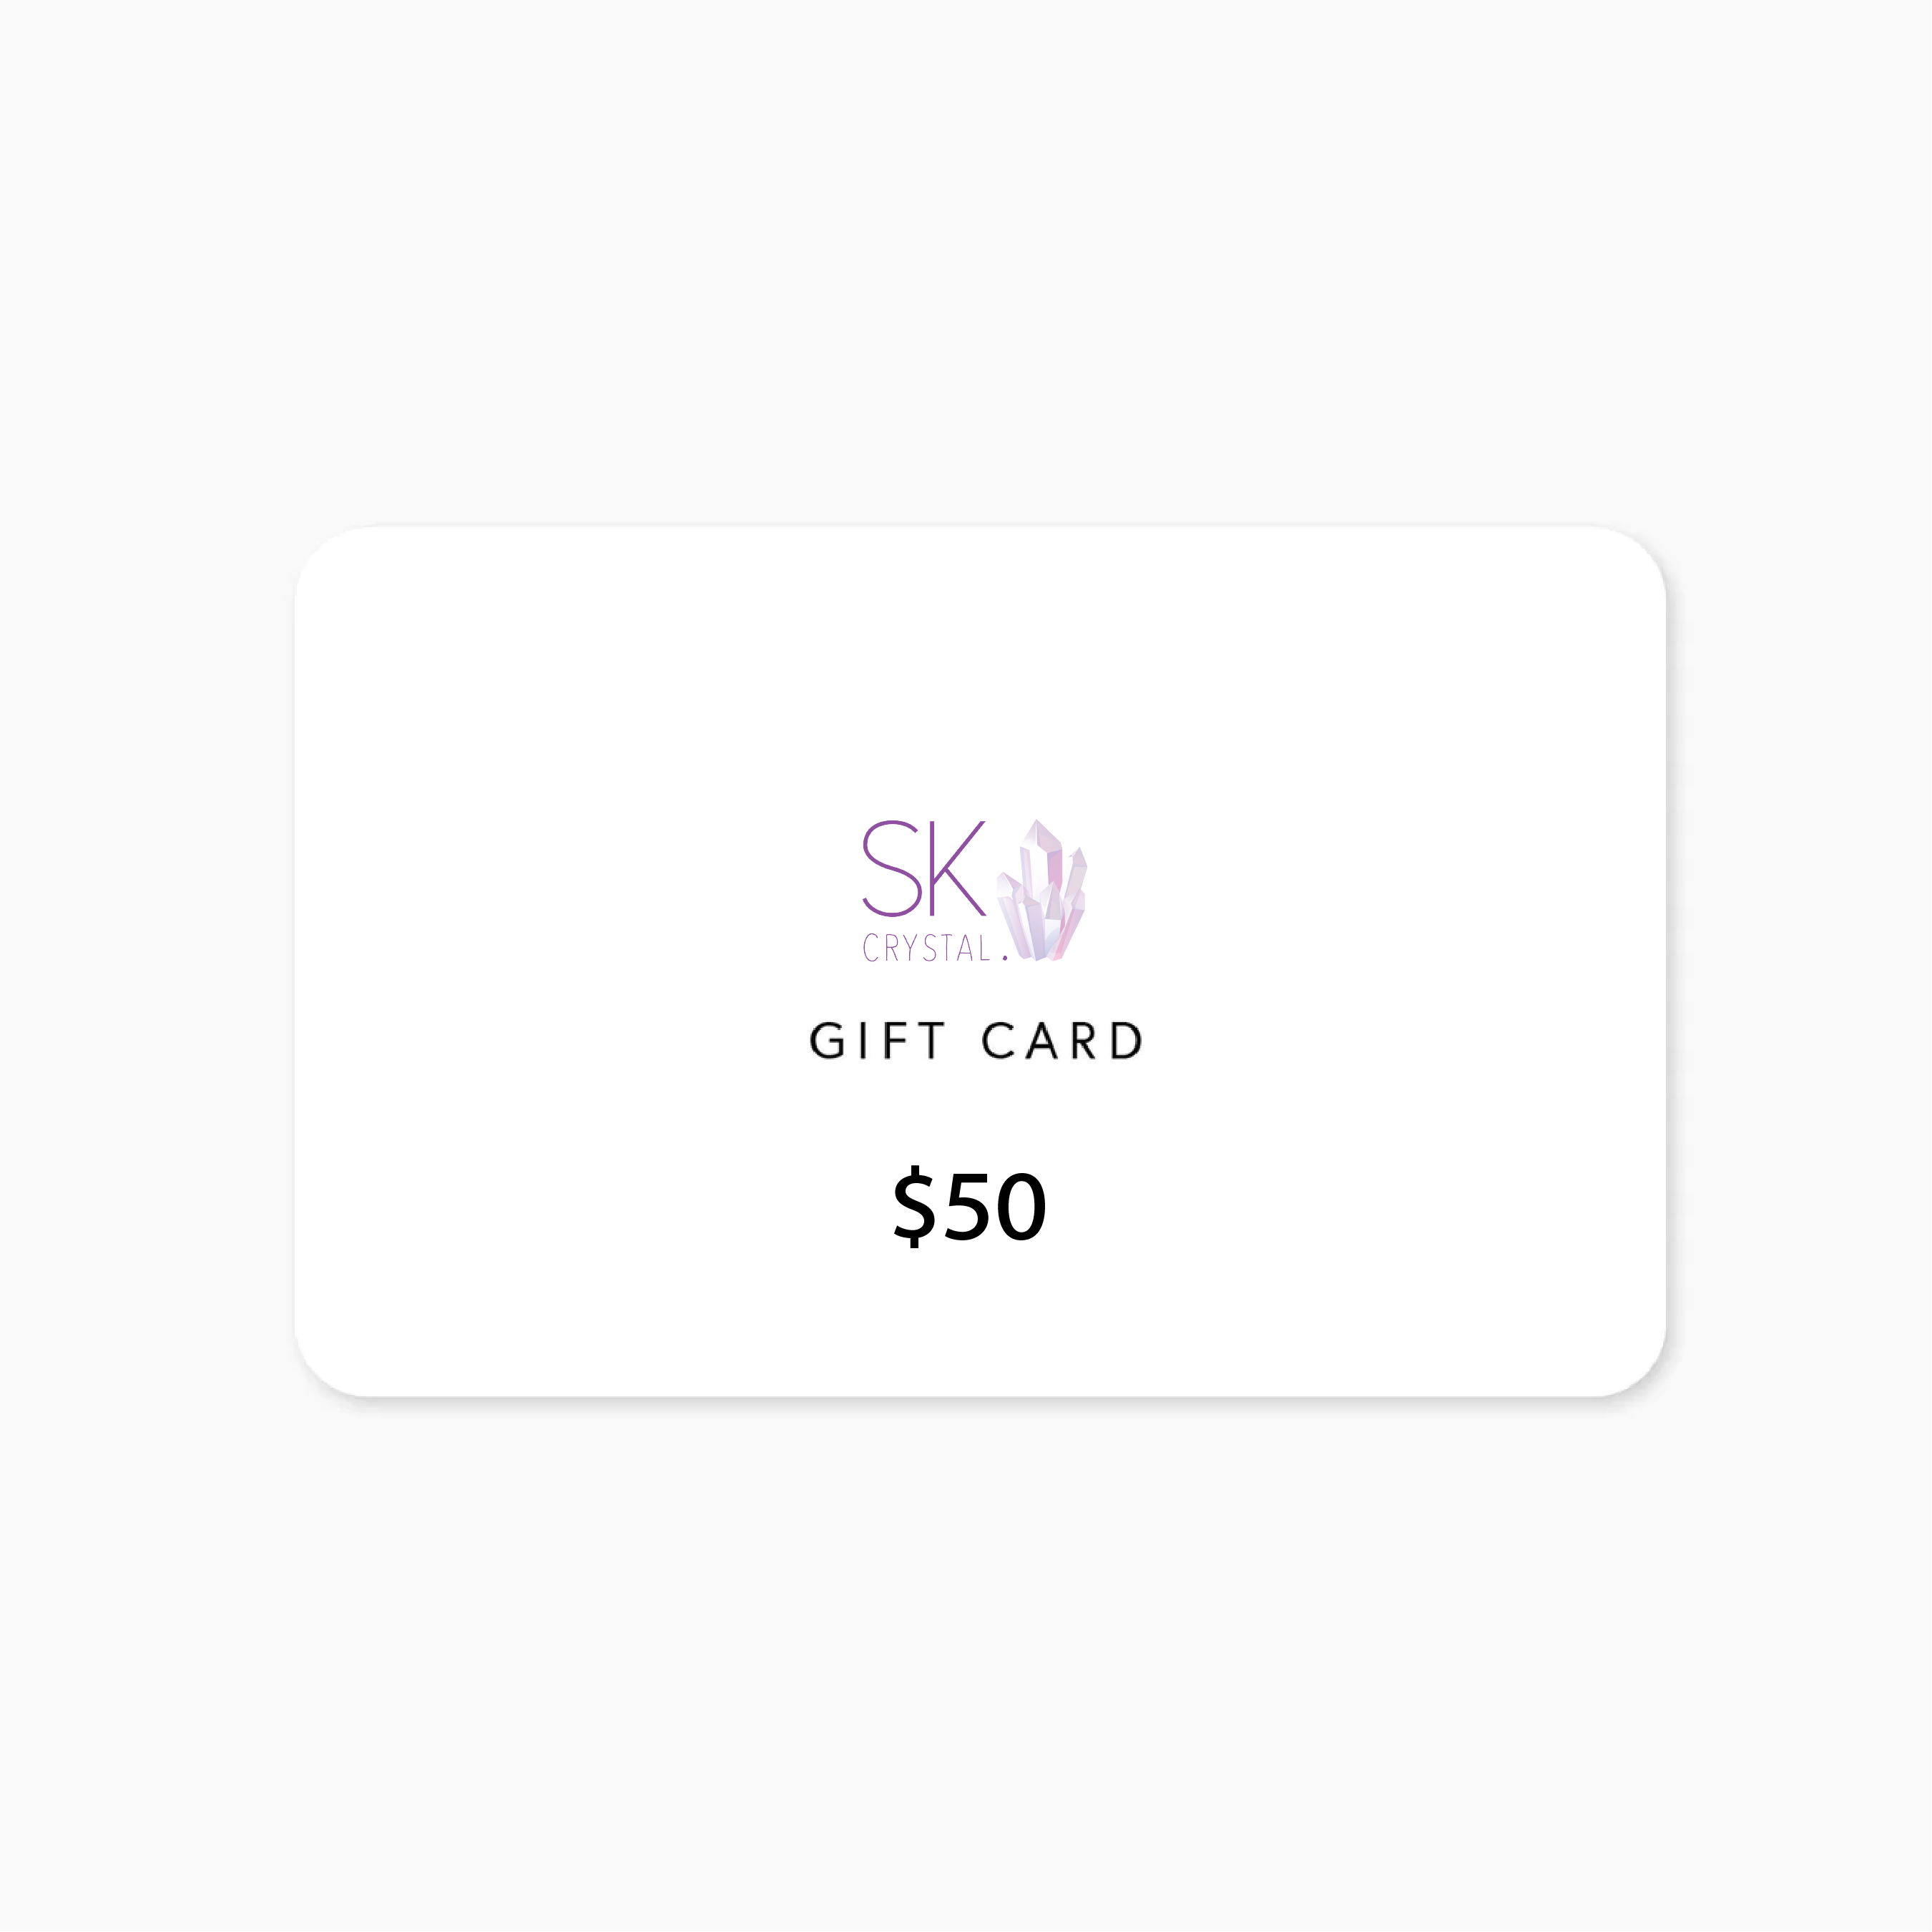 GIFT CARD $50